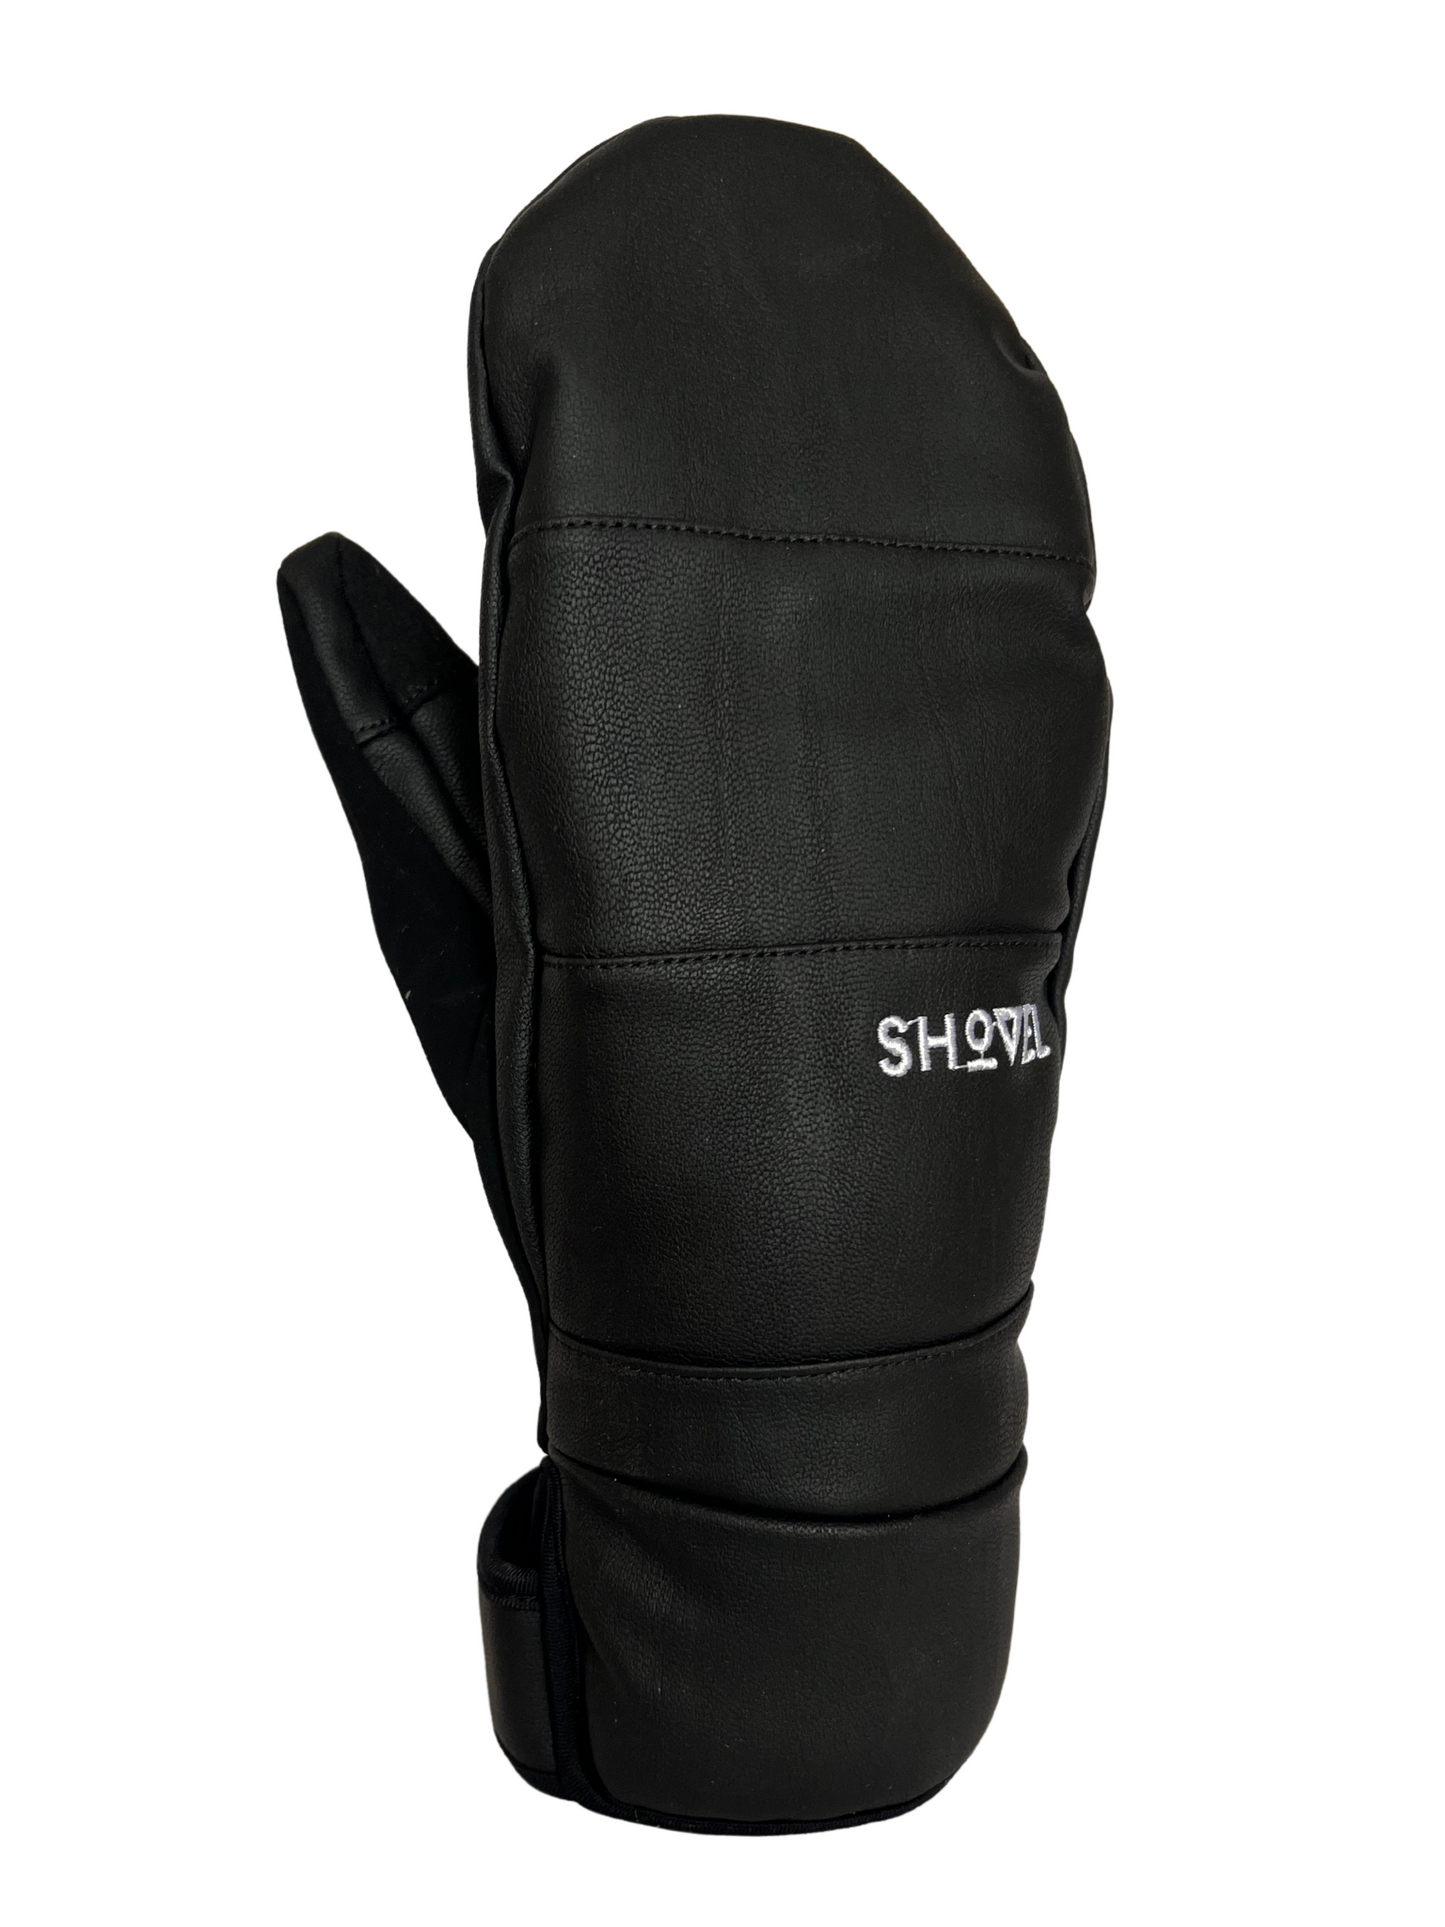 Premium Black Leather Gloves